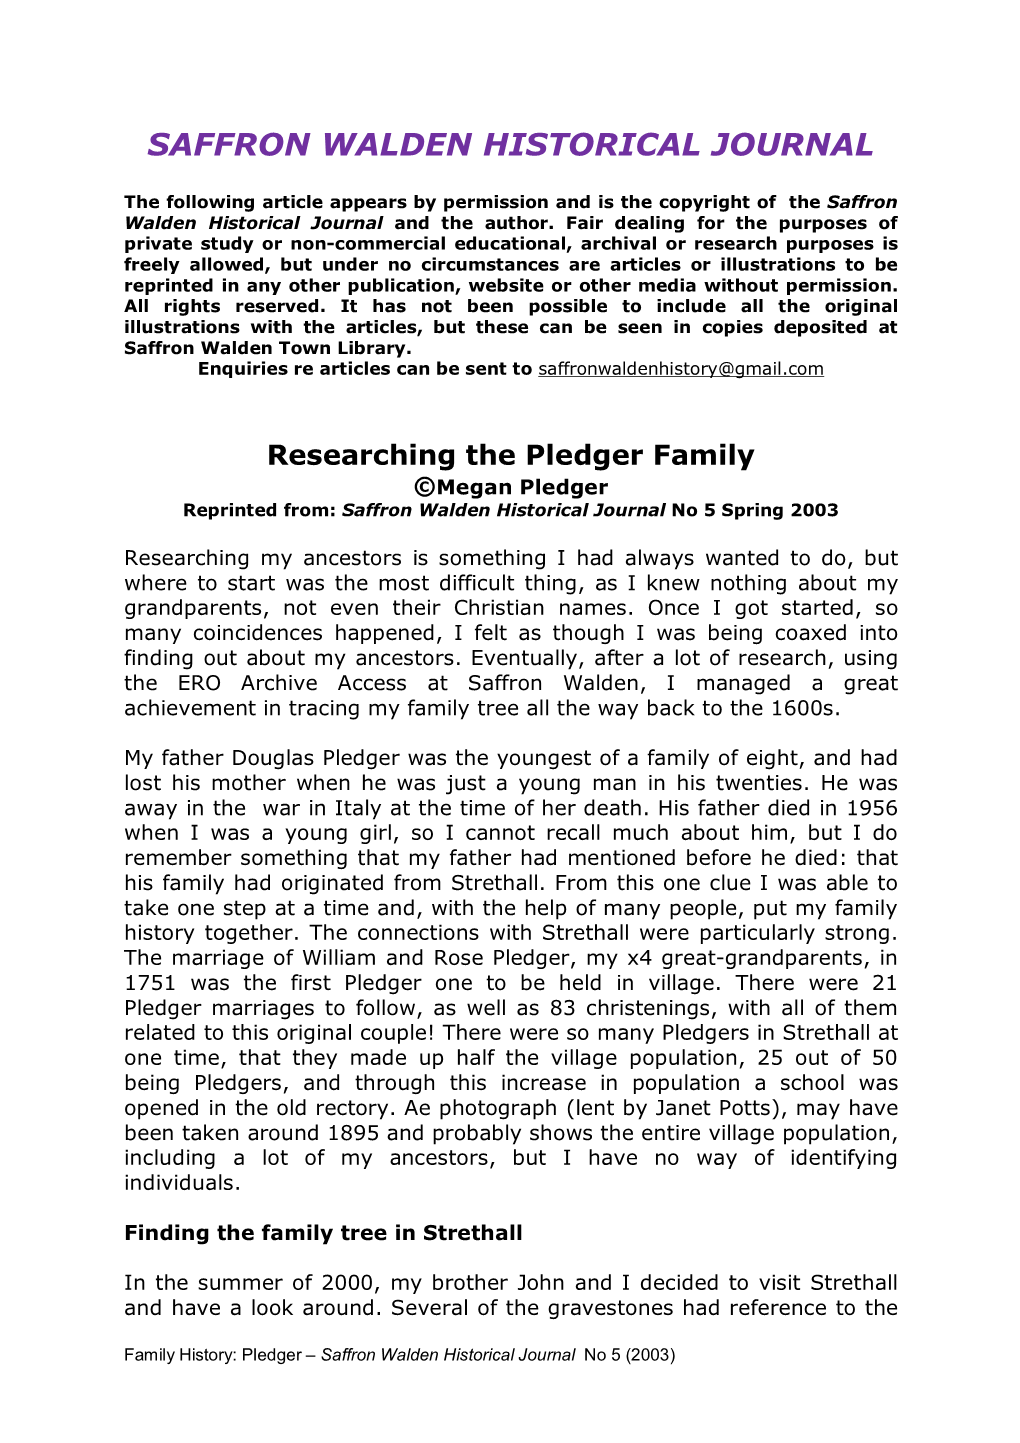 Pledger Family ©Megan Pledger Reprinted From: Saffron Walden Historical Journal No 5 Spring 2003